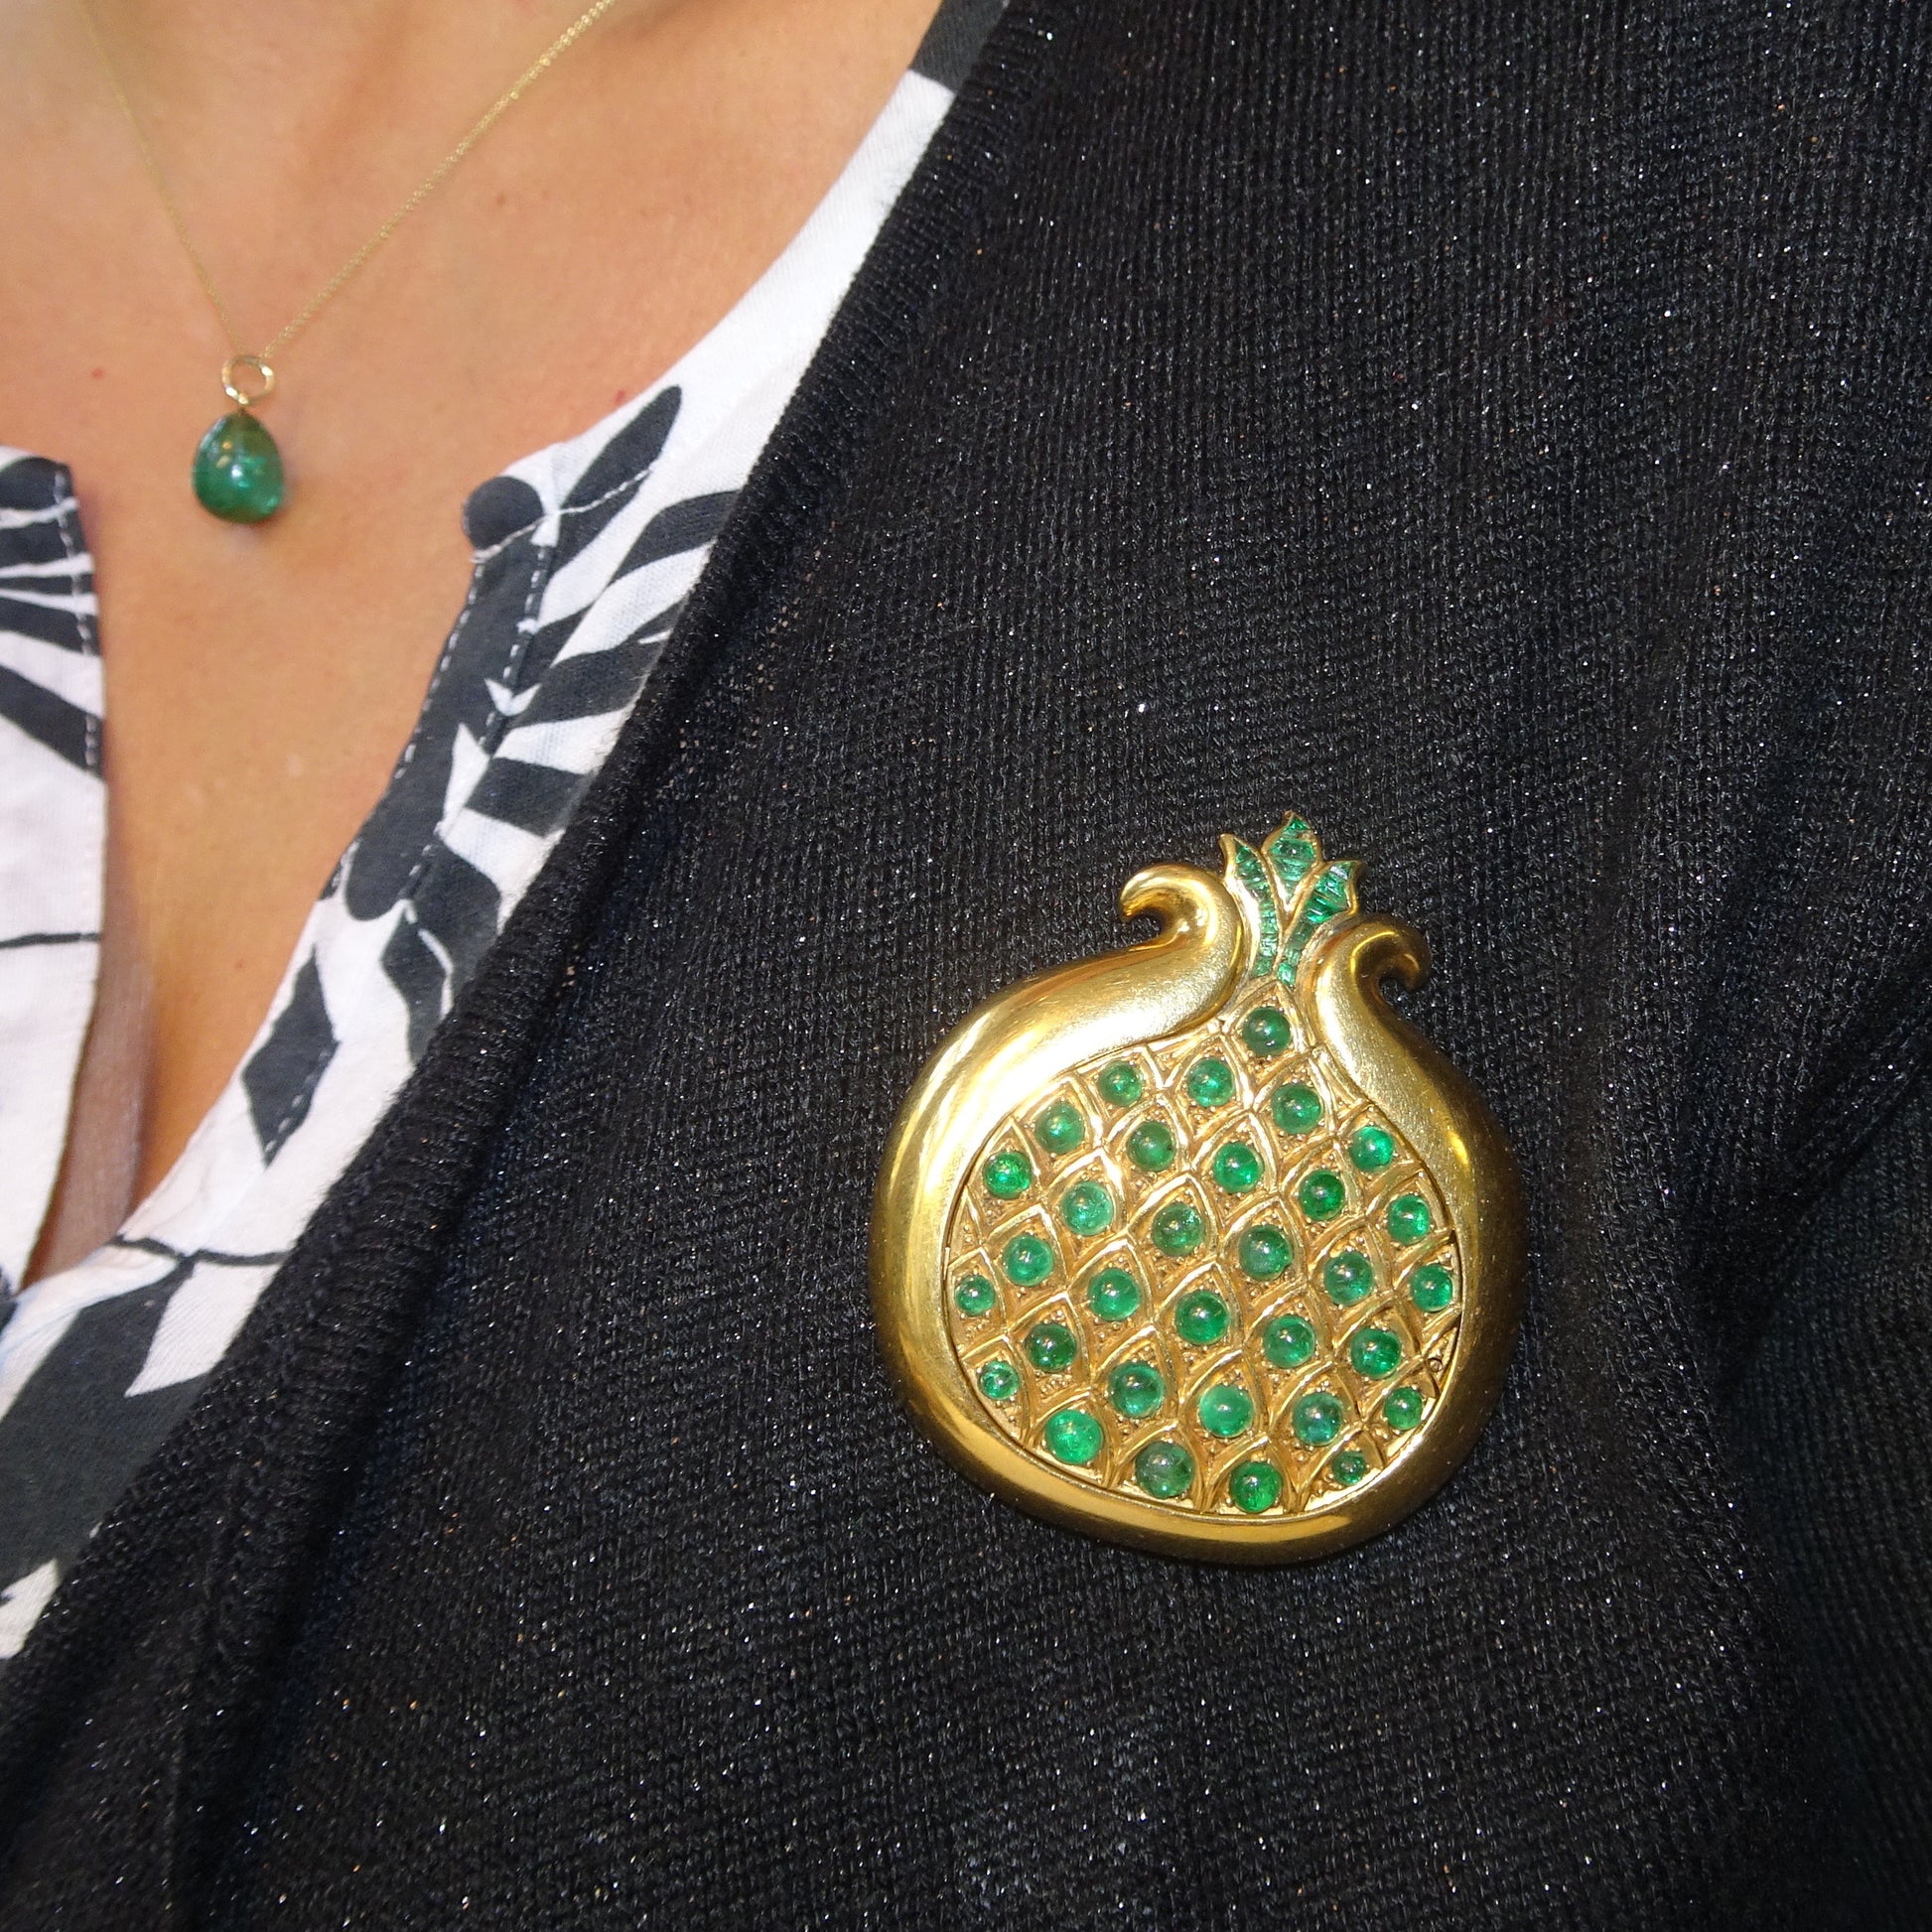 Rene Boivin 1930s 18KT Yellow Gold Emerald Pomegranate Brooch worn on blouse